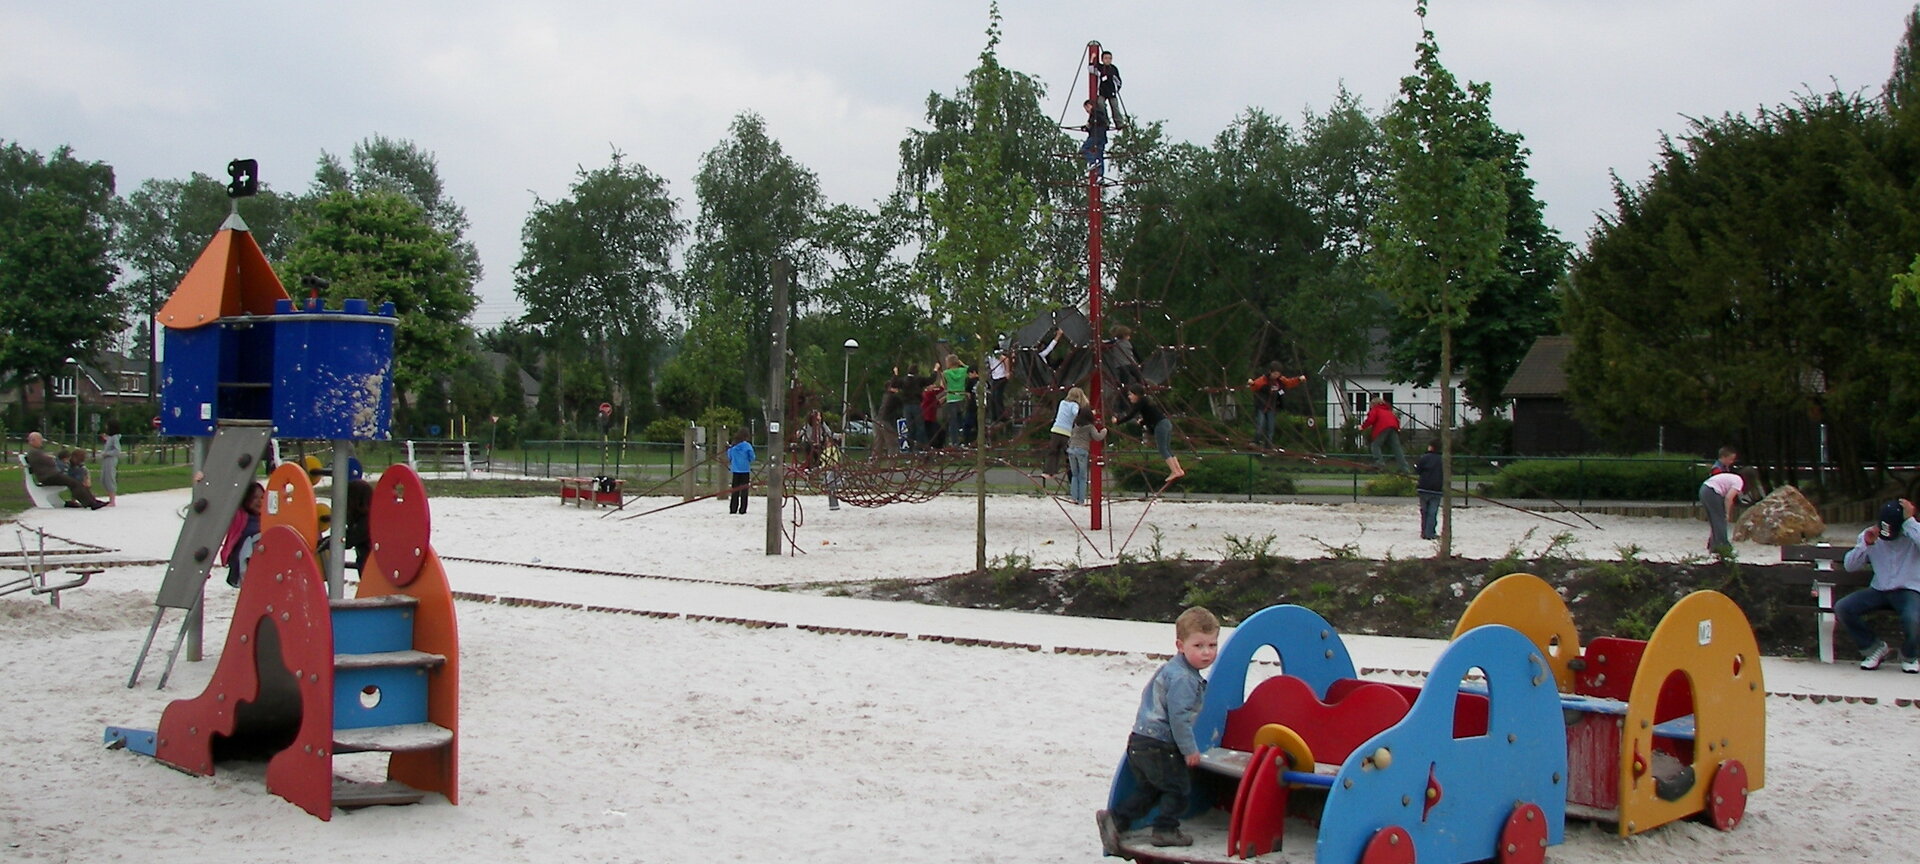 Stadspark de Motten - Speeltuin de Motten